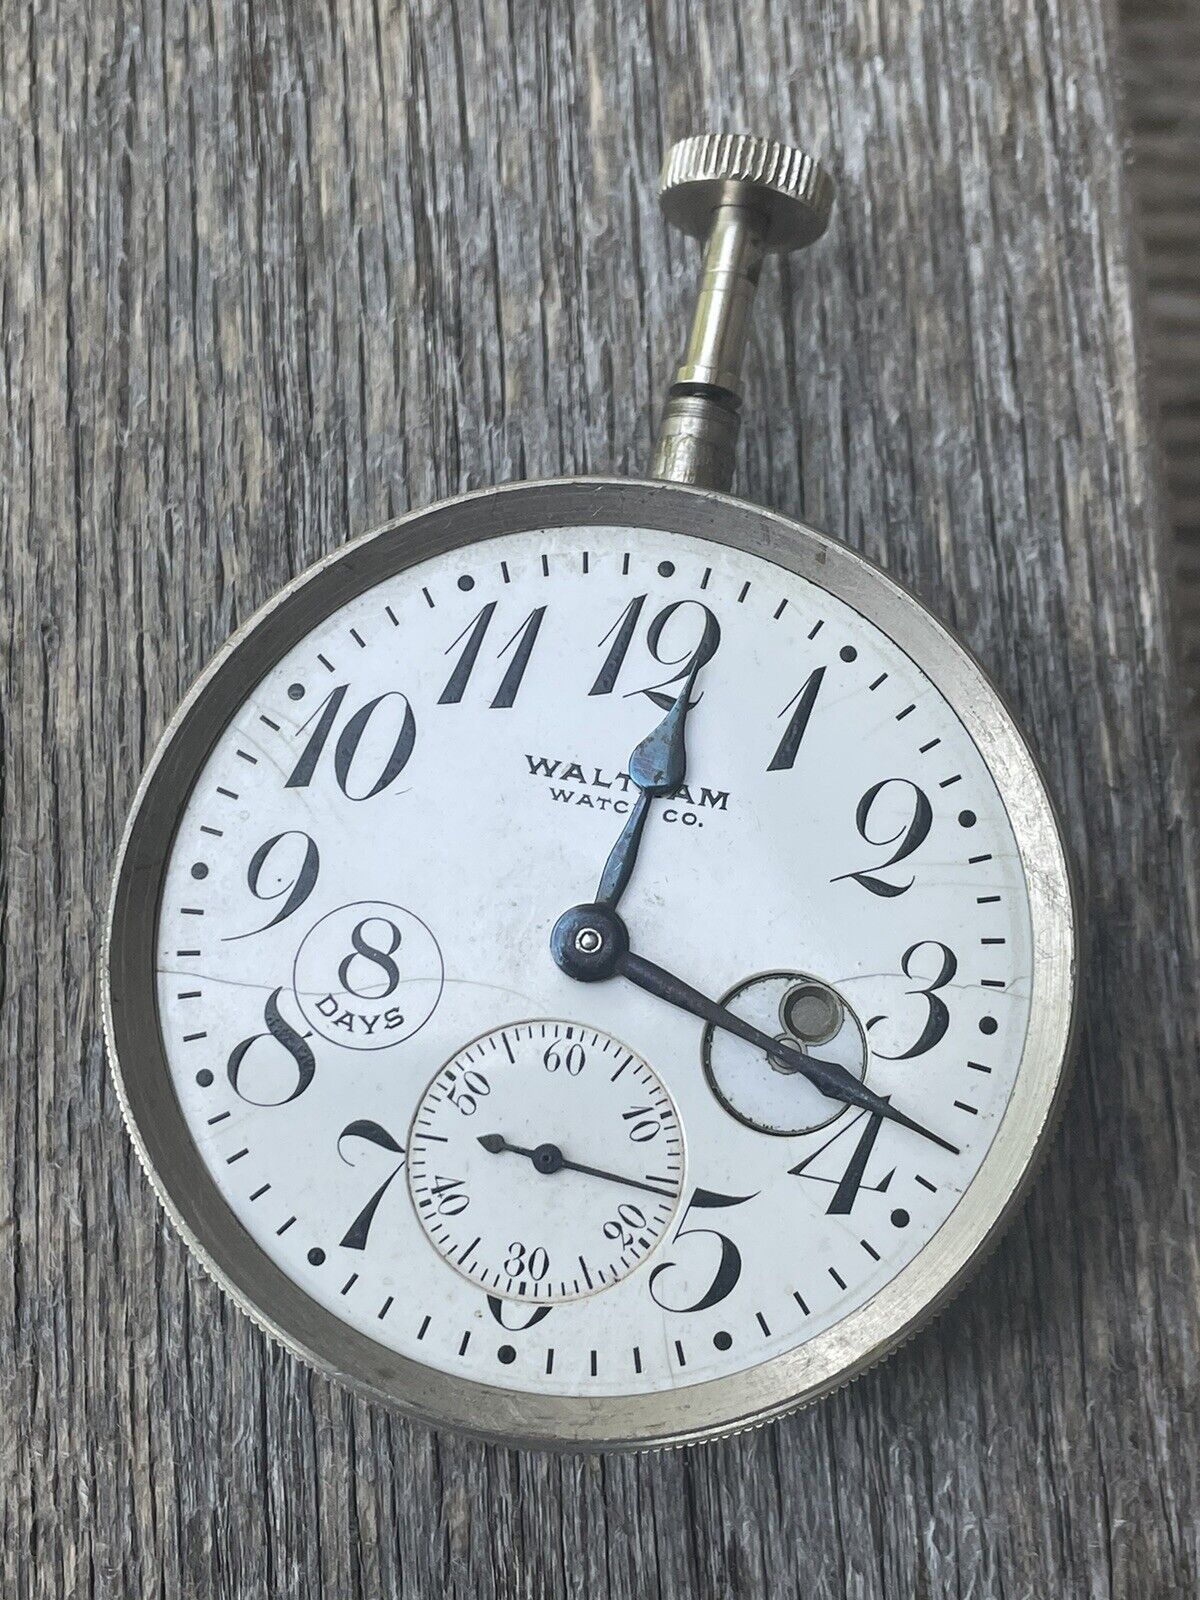 Antique Vintage Waltham Watch Co 8 days car clock watch Runs *READ* Lot #1